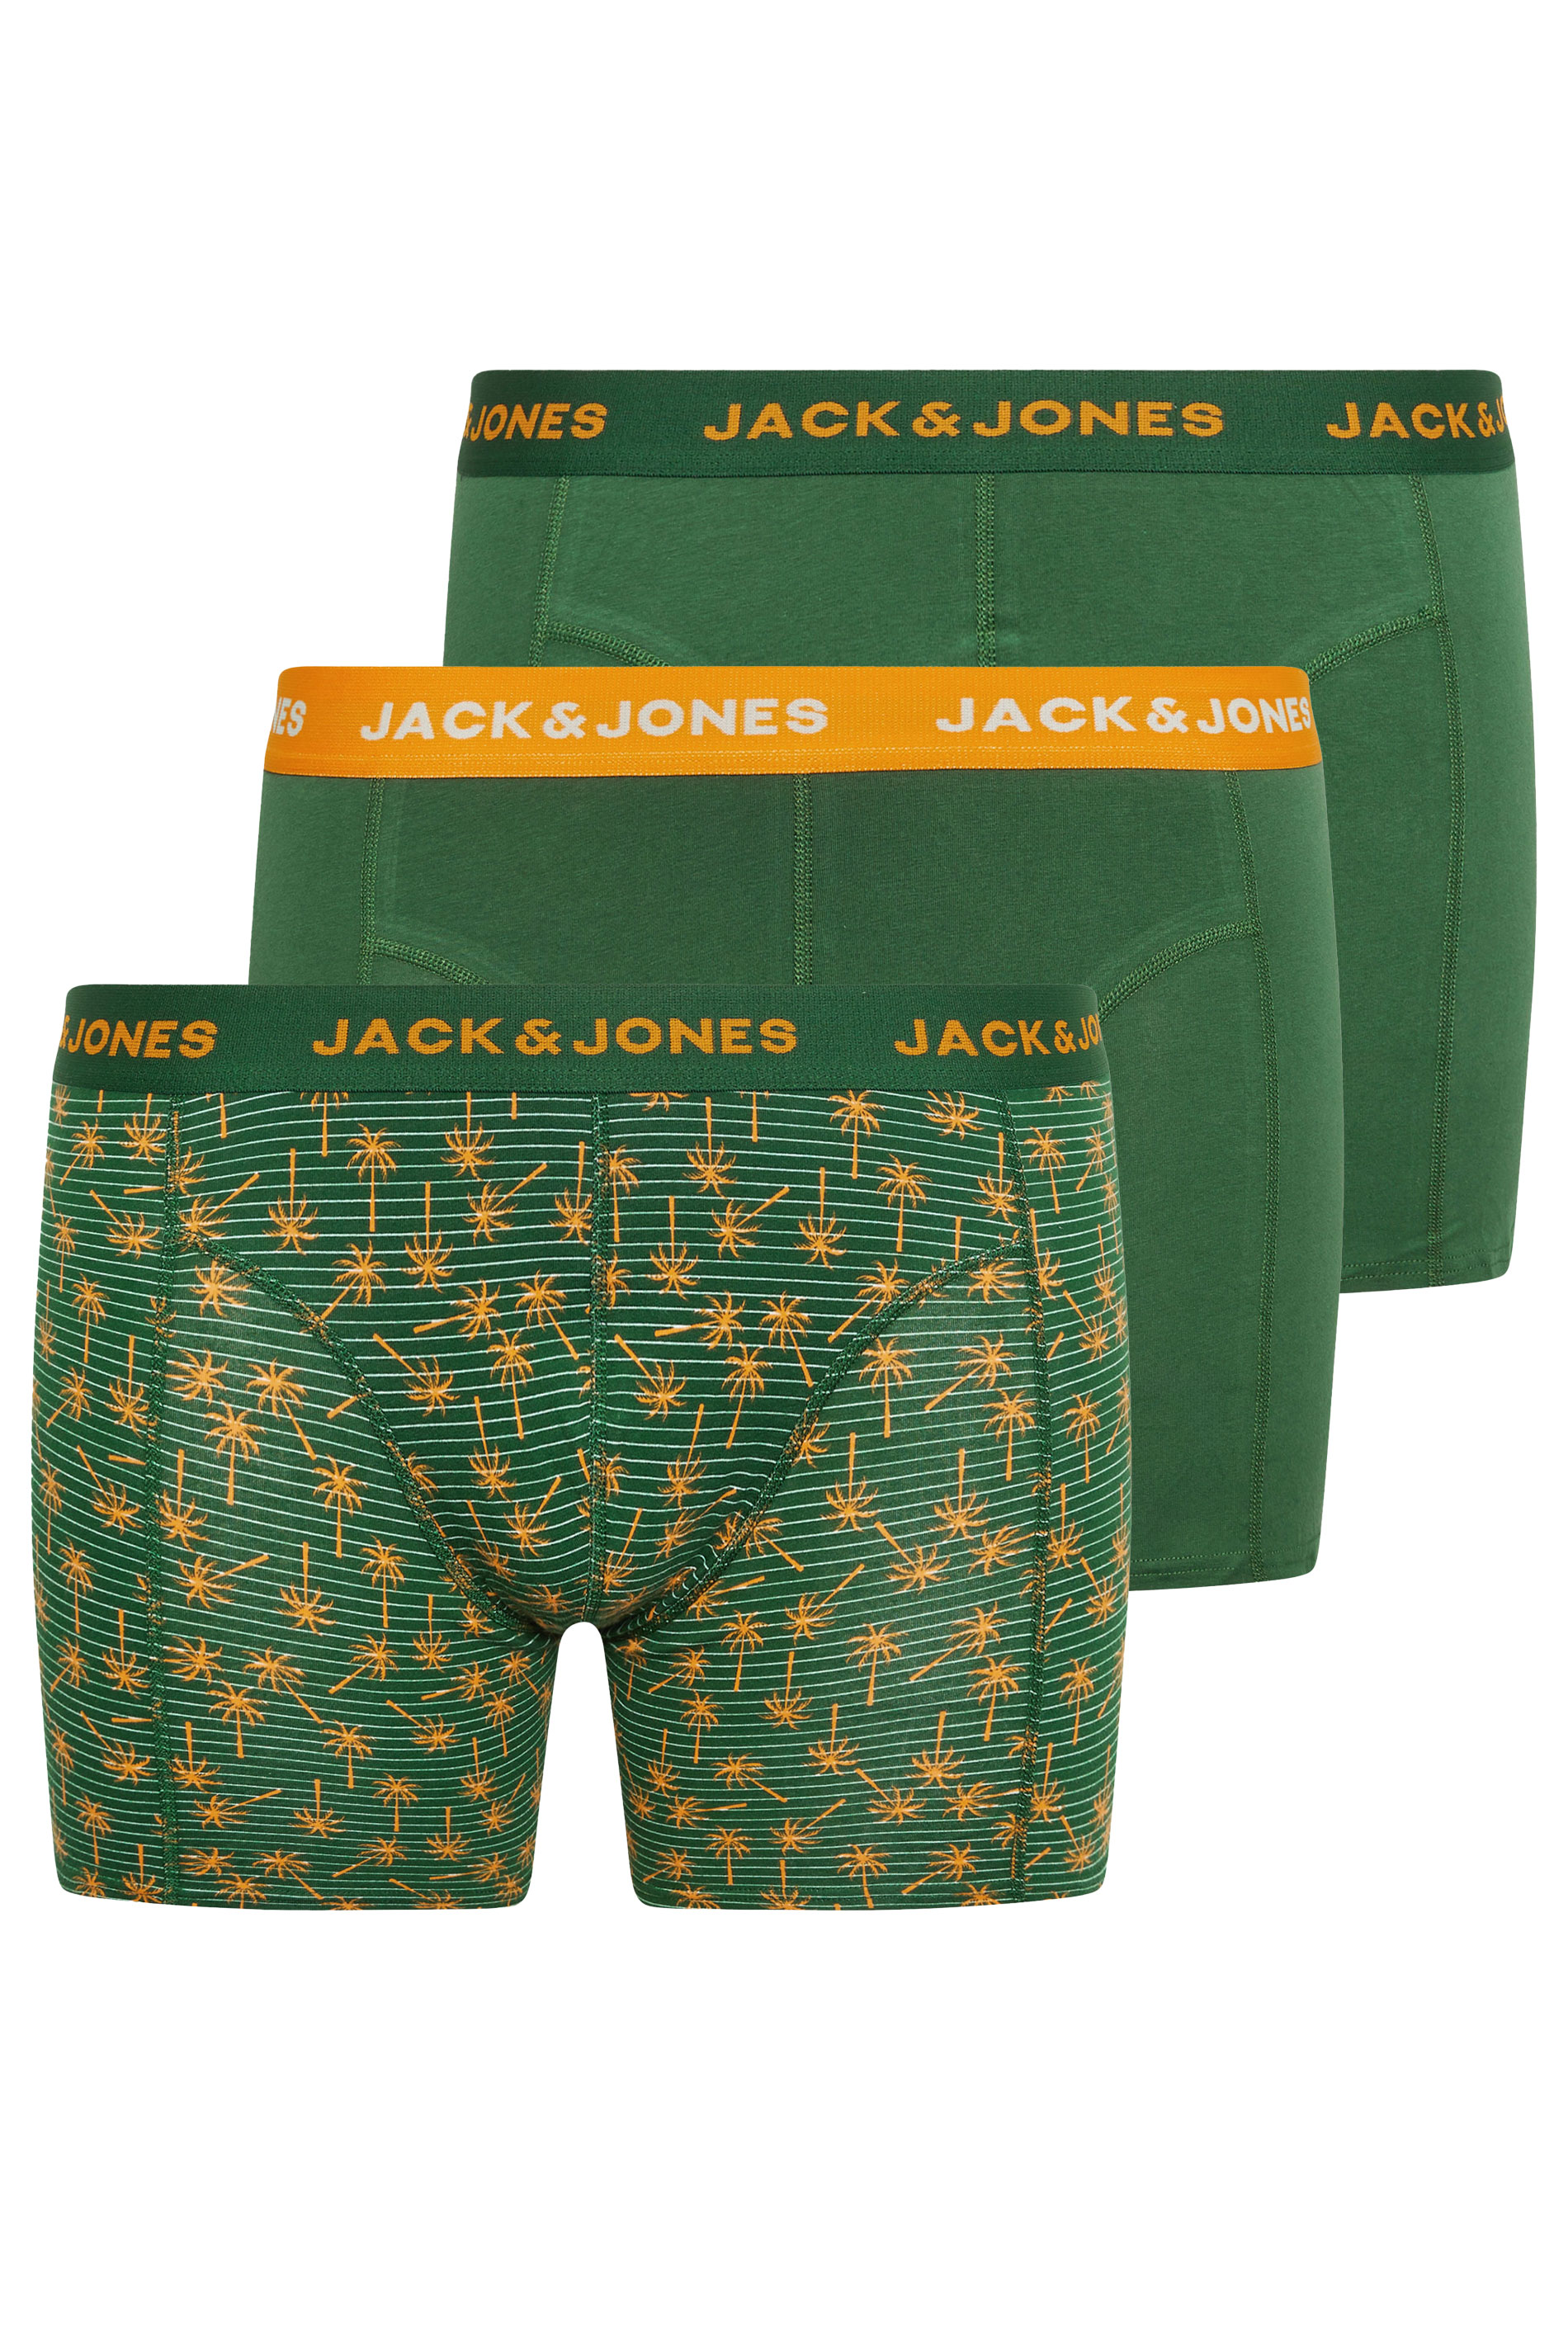 JACK & JONES Green 3 Pack Trunks | BadRhino 3